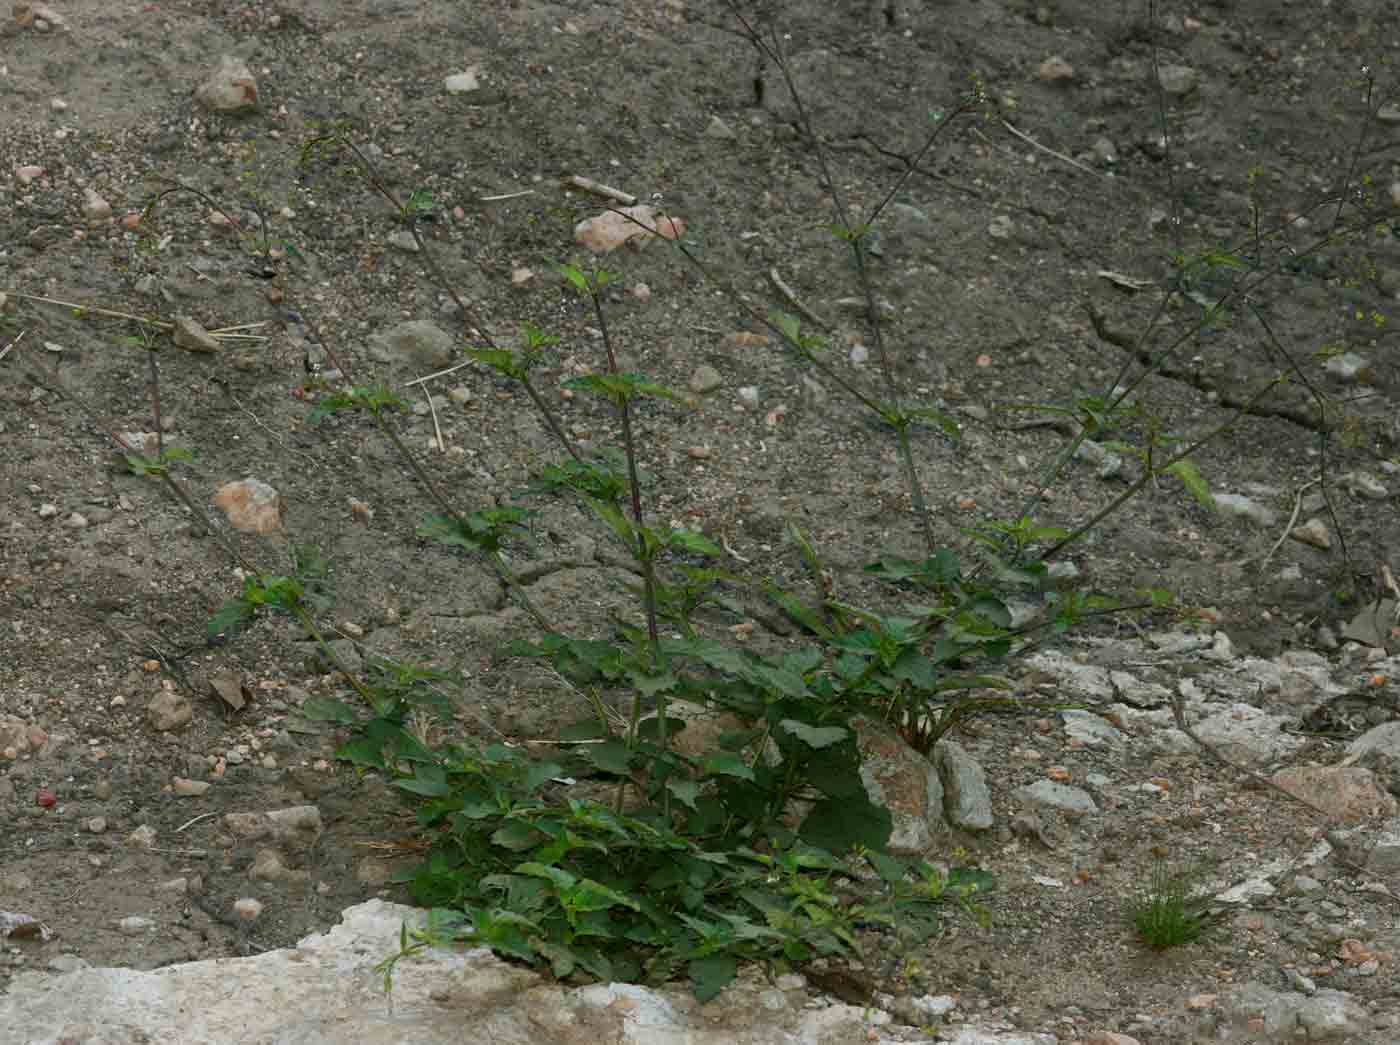 Boerhavia erecta